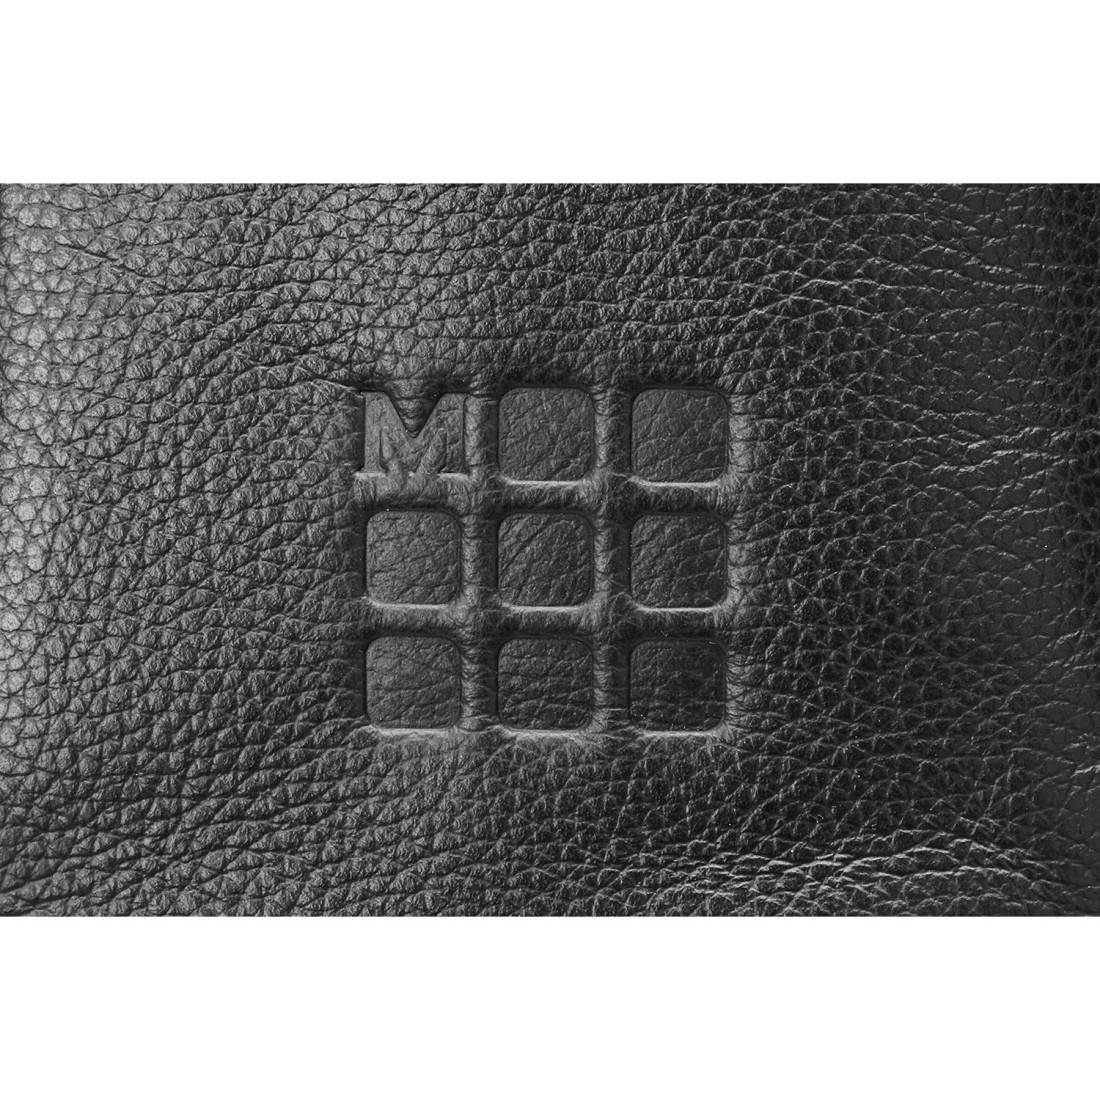 Moleskine  Classic Black Leather  for Digital Devices  Backback